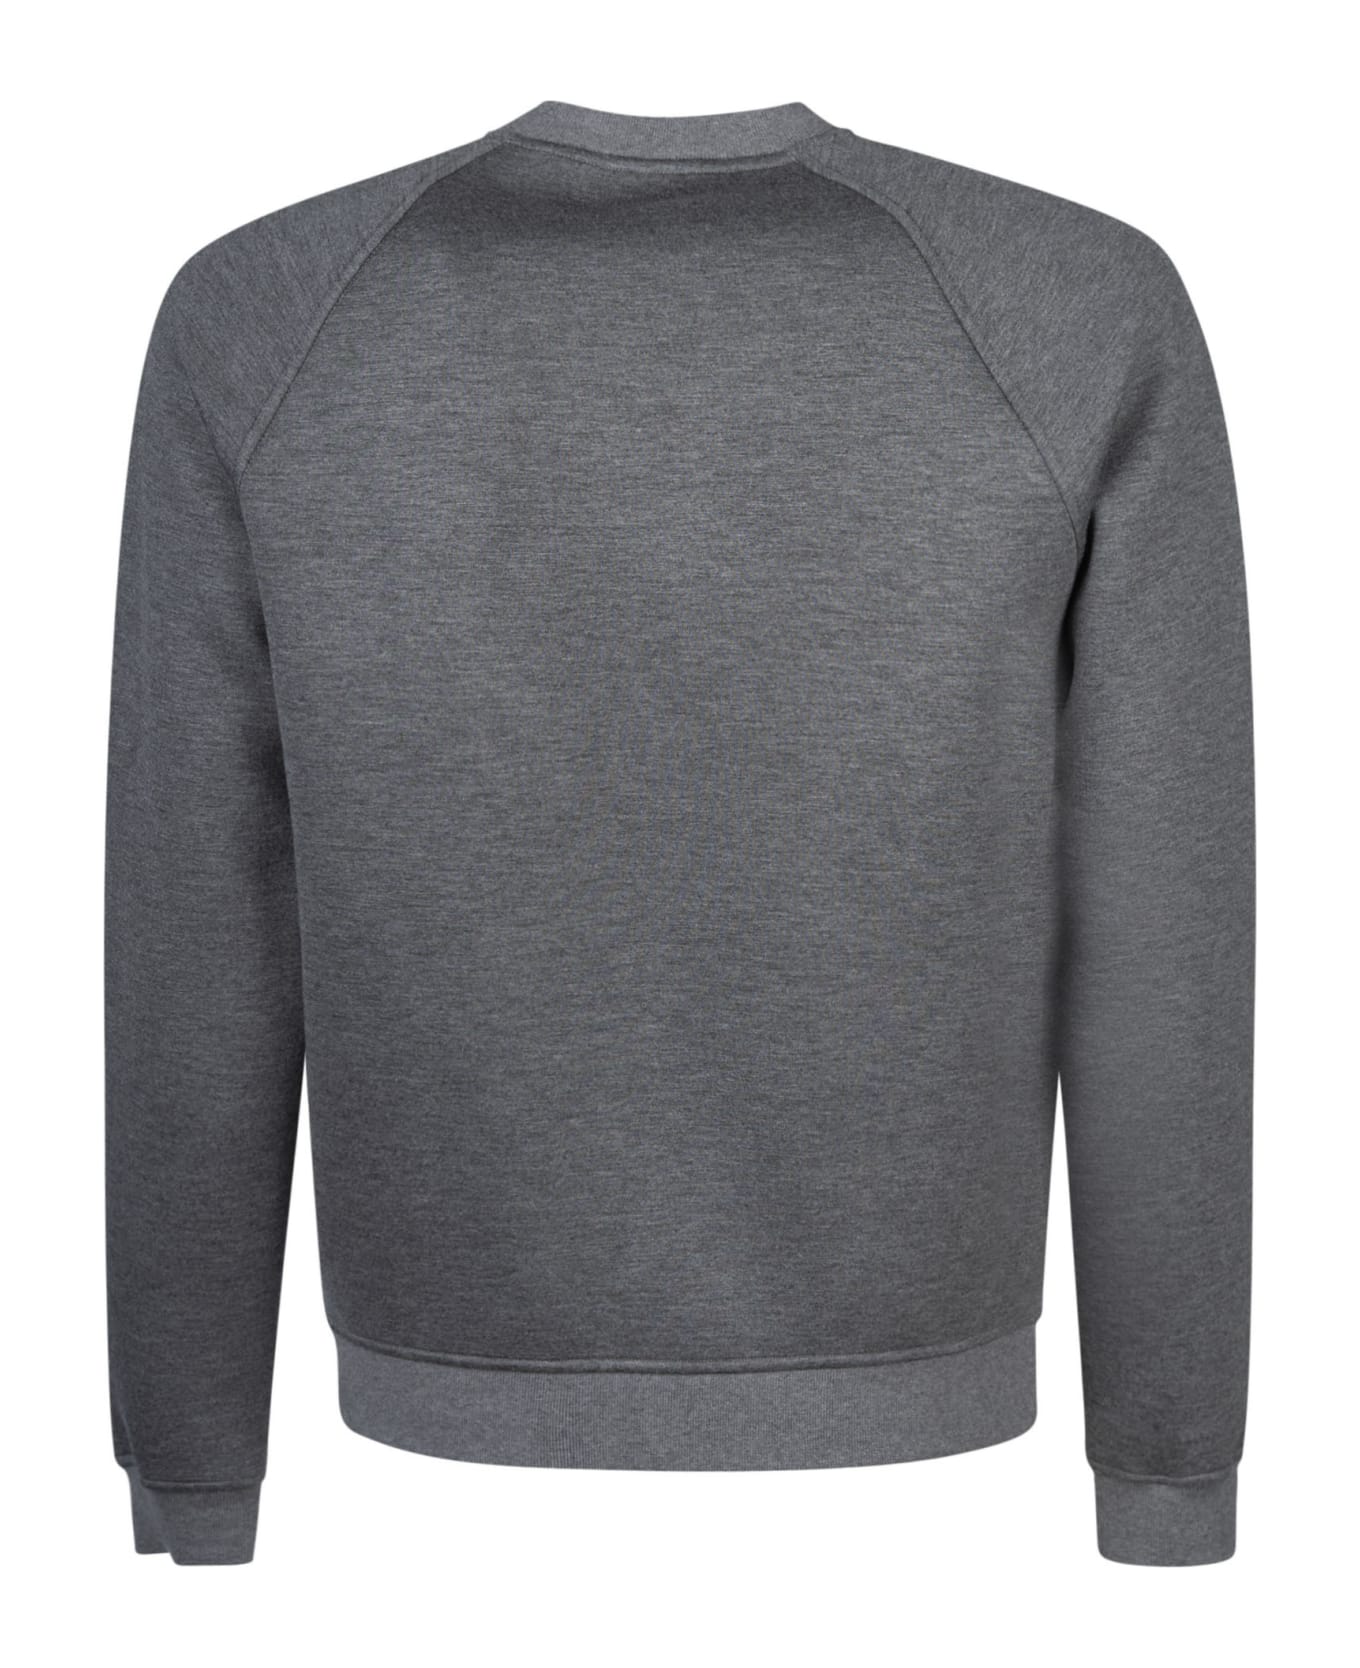 Kiton Knt Logo Sweater - Grey フリース